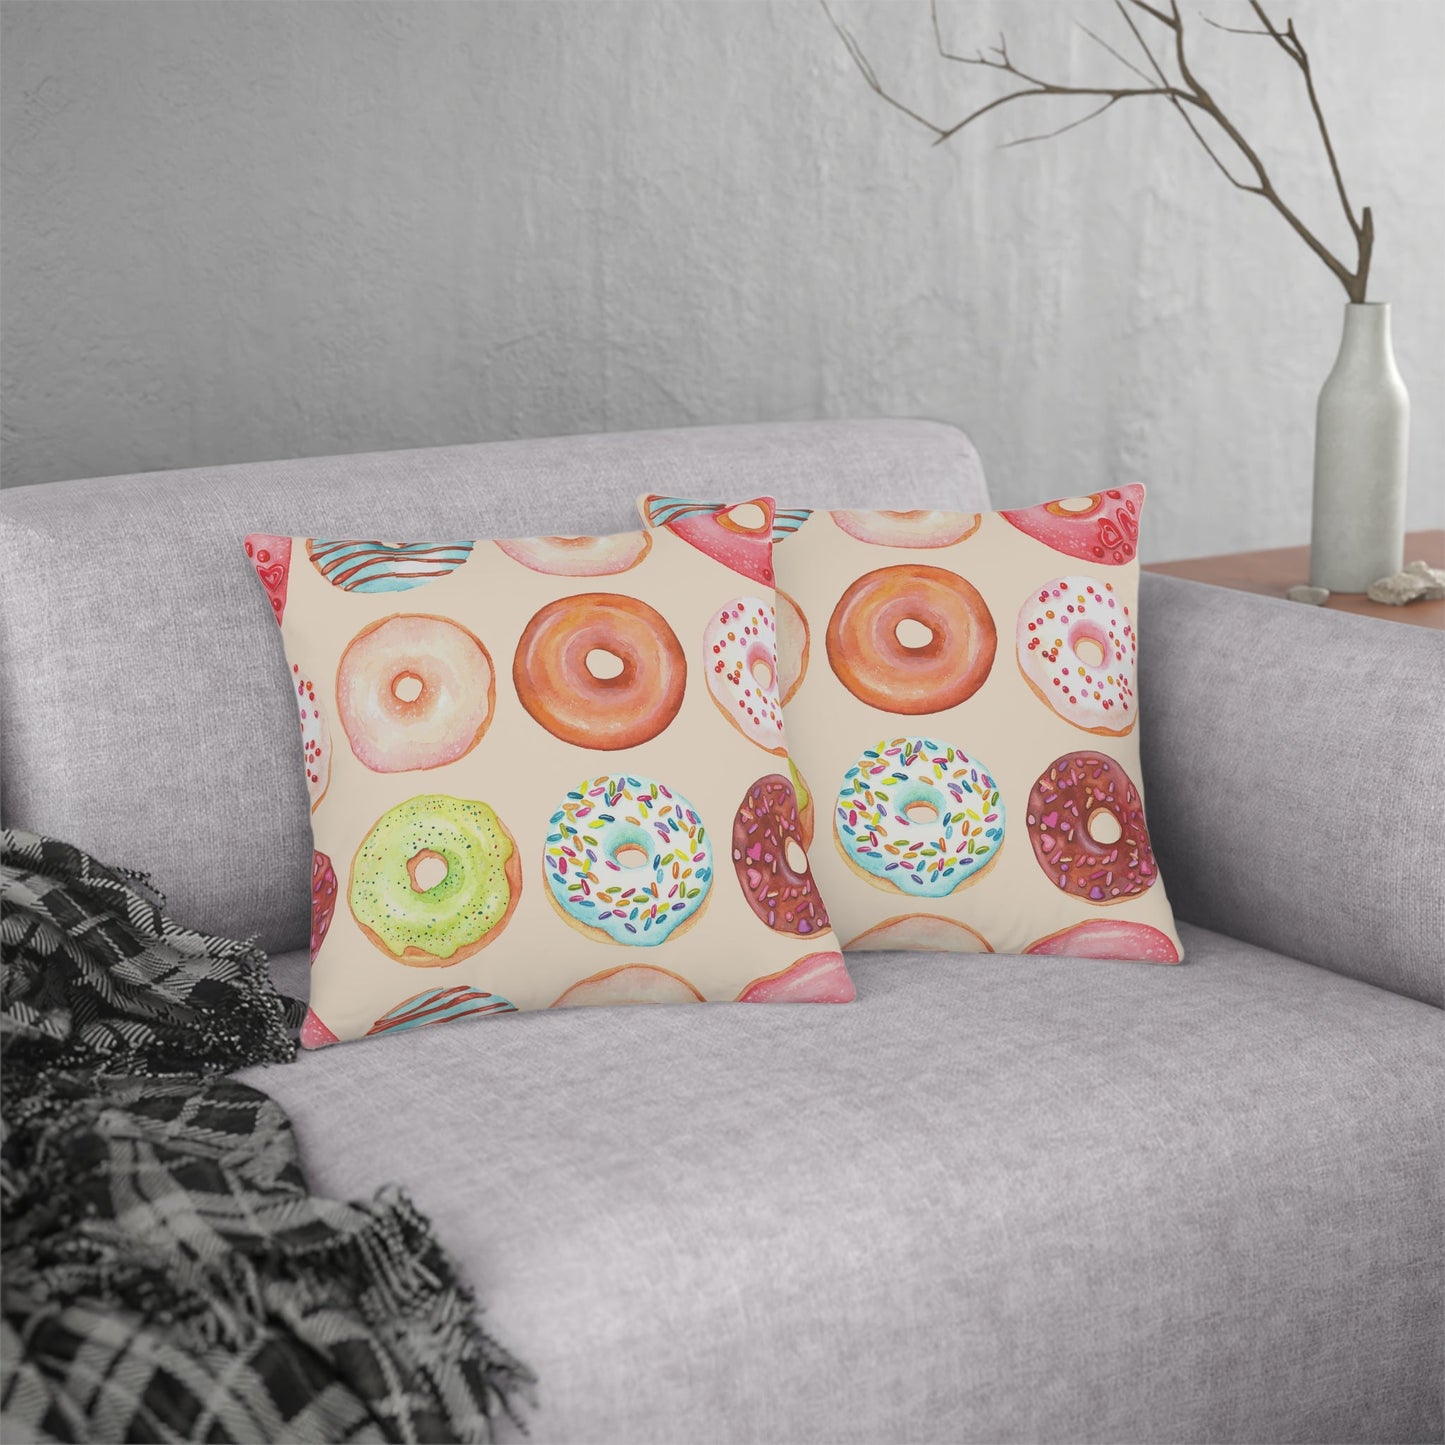 Colorful Glazed Doughnut Waterproof Pillows-Shalav5